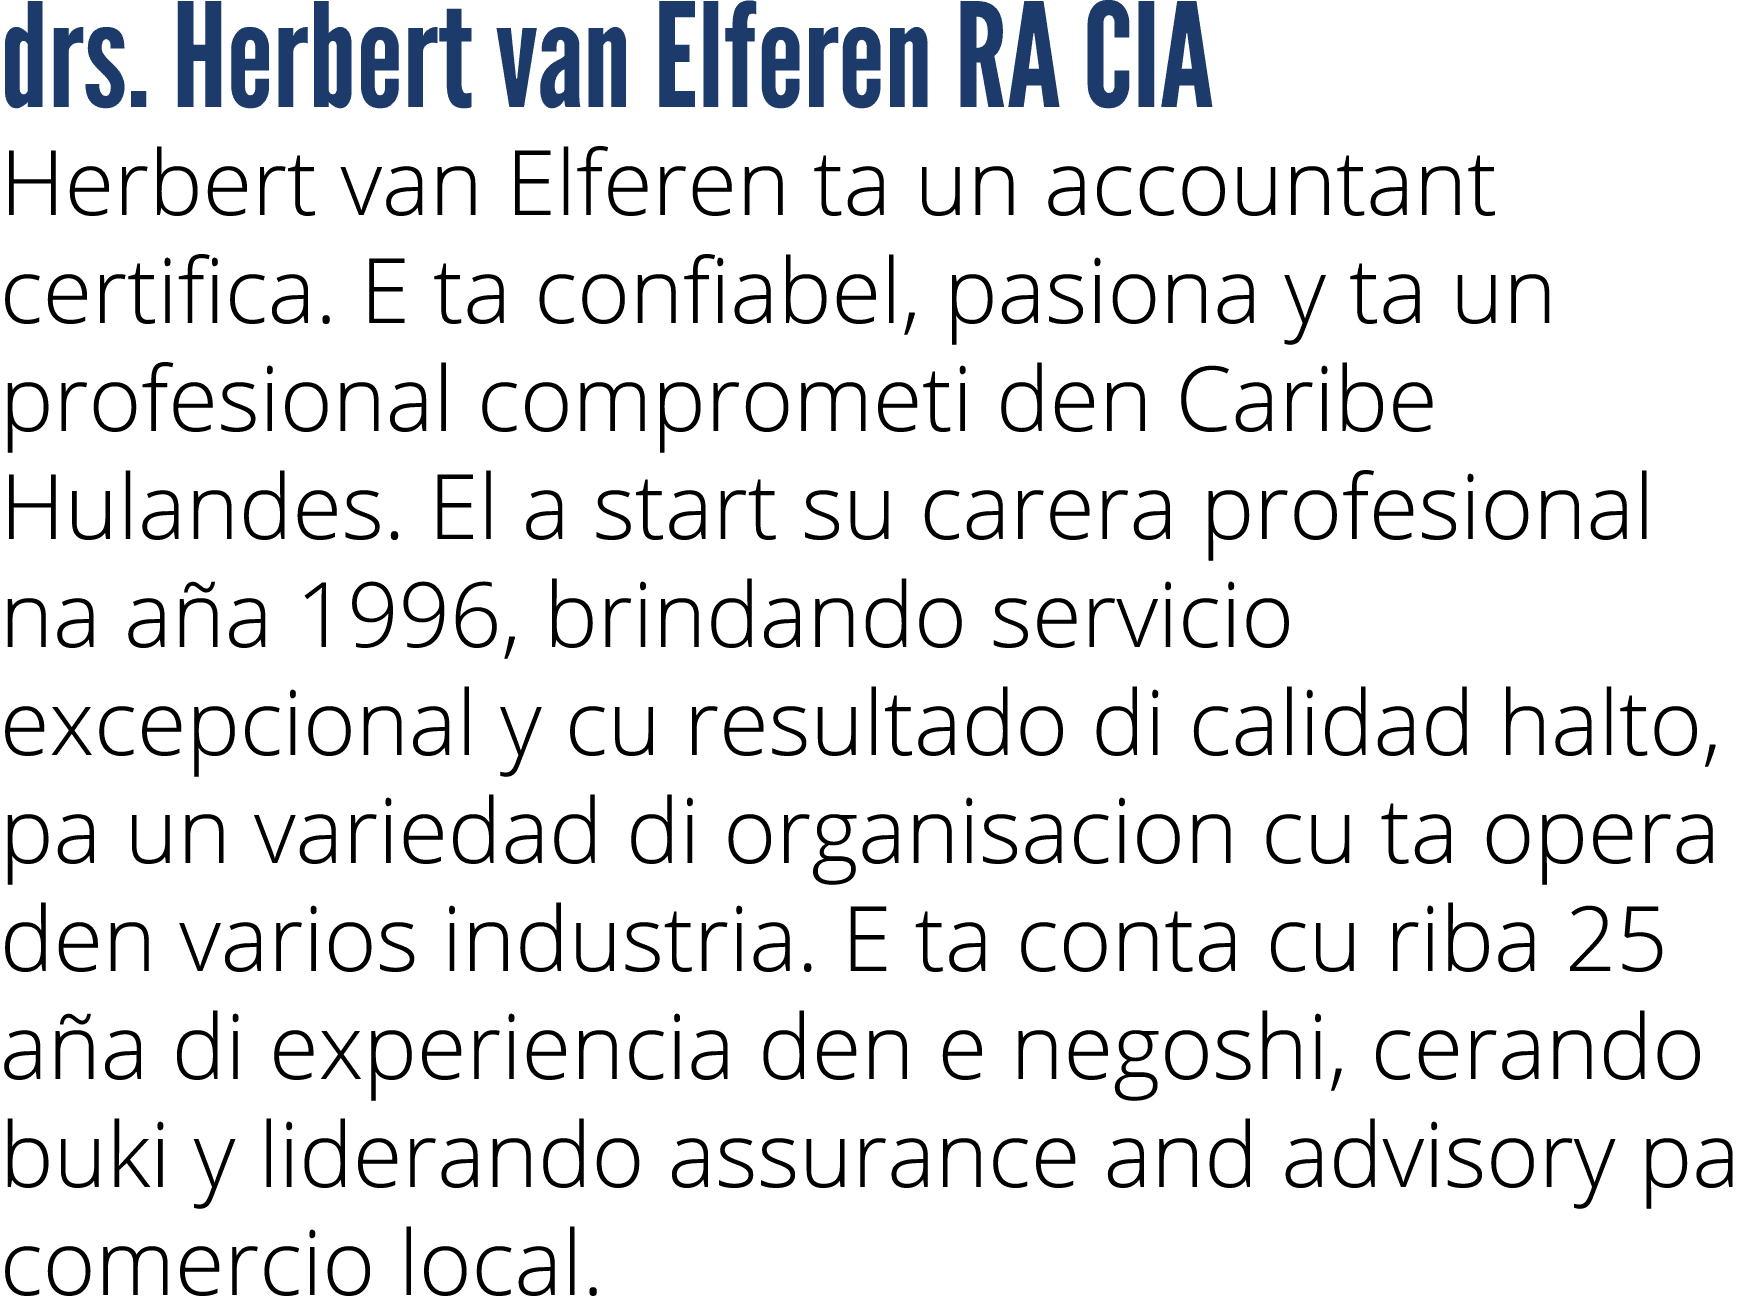 drs. Herbert van Elferen RA CIA Herbert van Elferen ta un accountant certifica. E ta confiabel, pasiona y ta un profe...